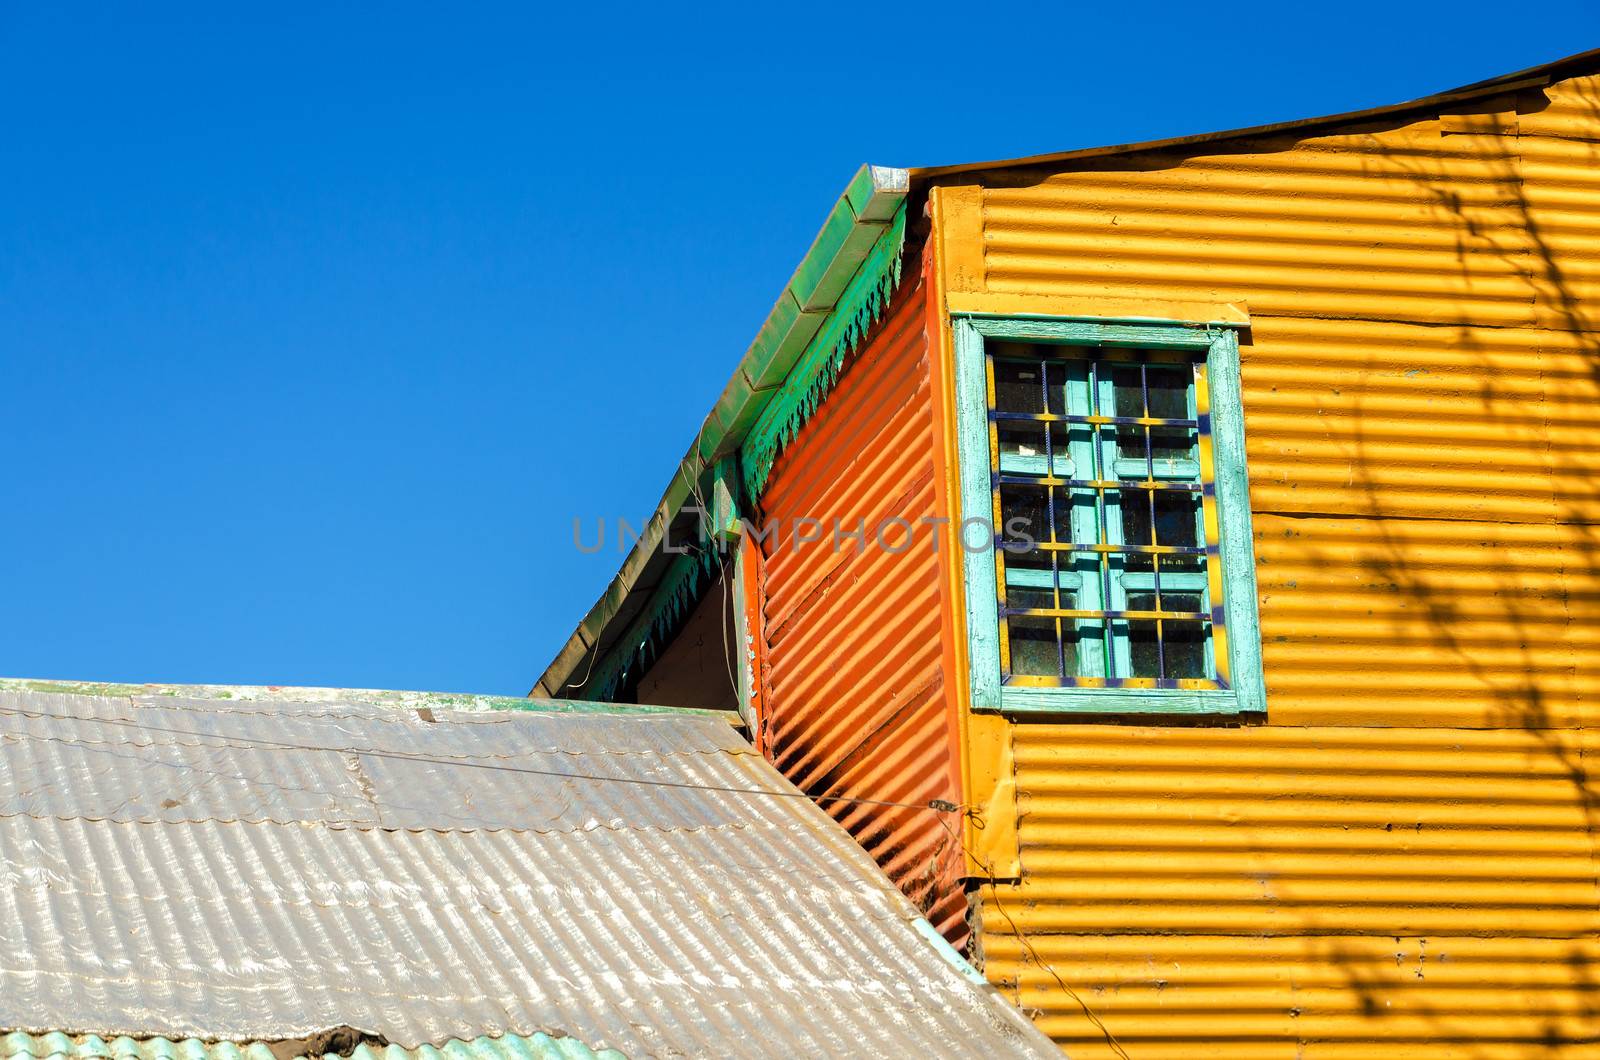 Orange Building and Blue Sky by jkraft5